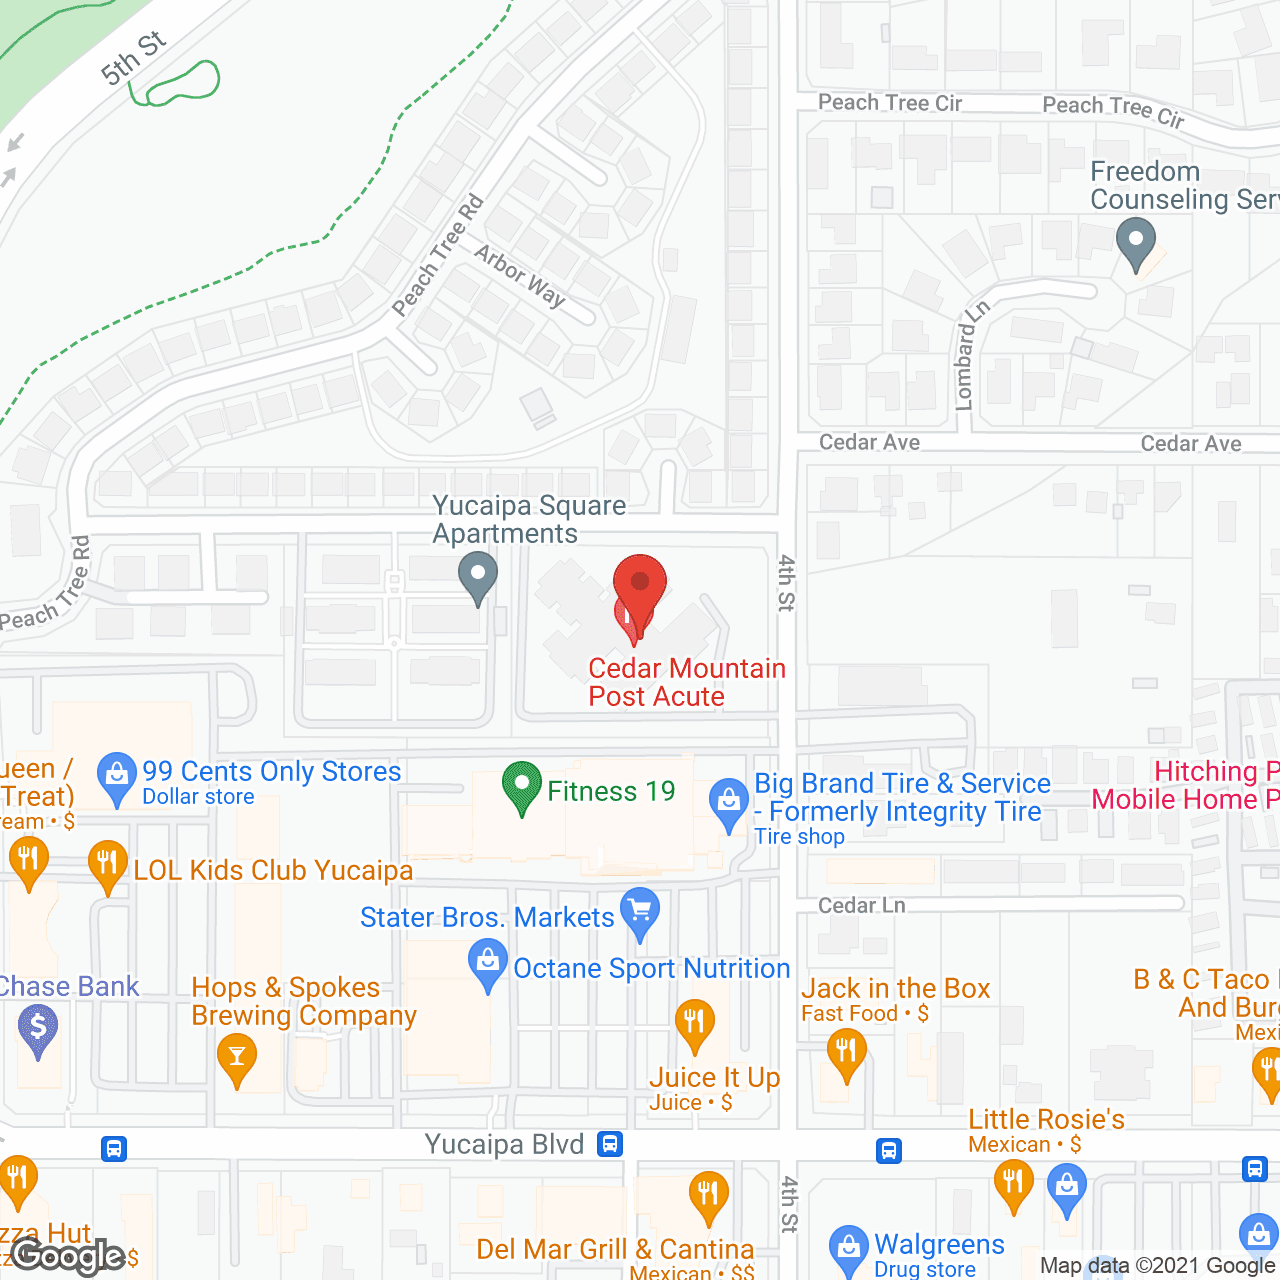 Cedar Mountain Post Acute in google map